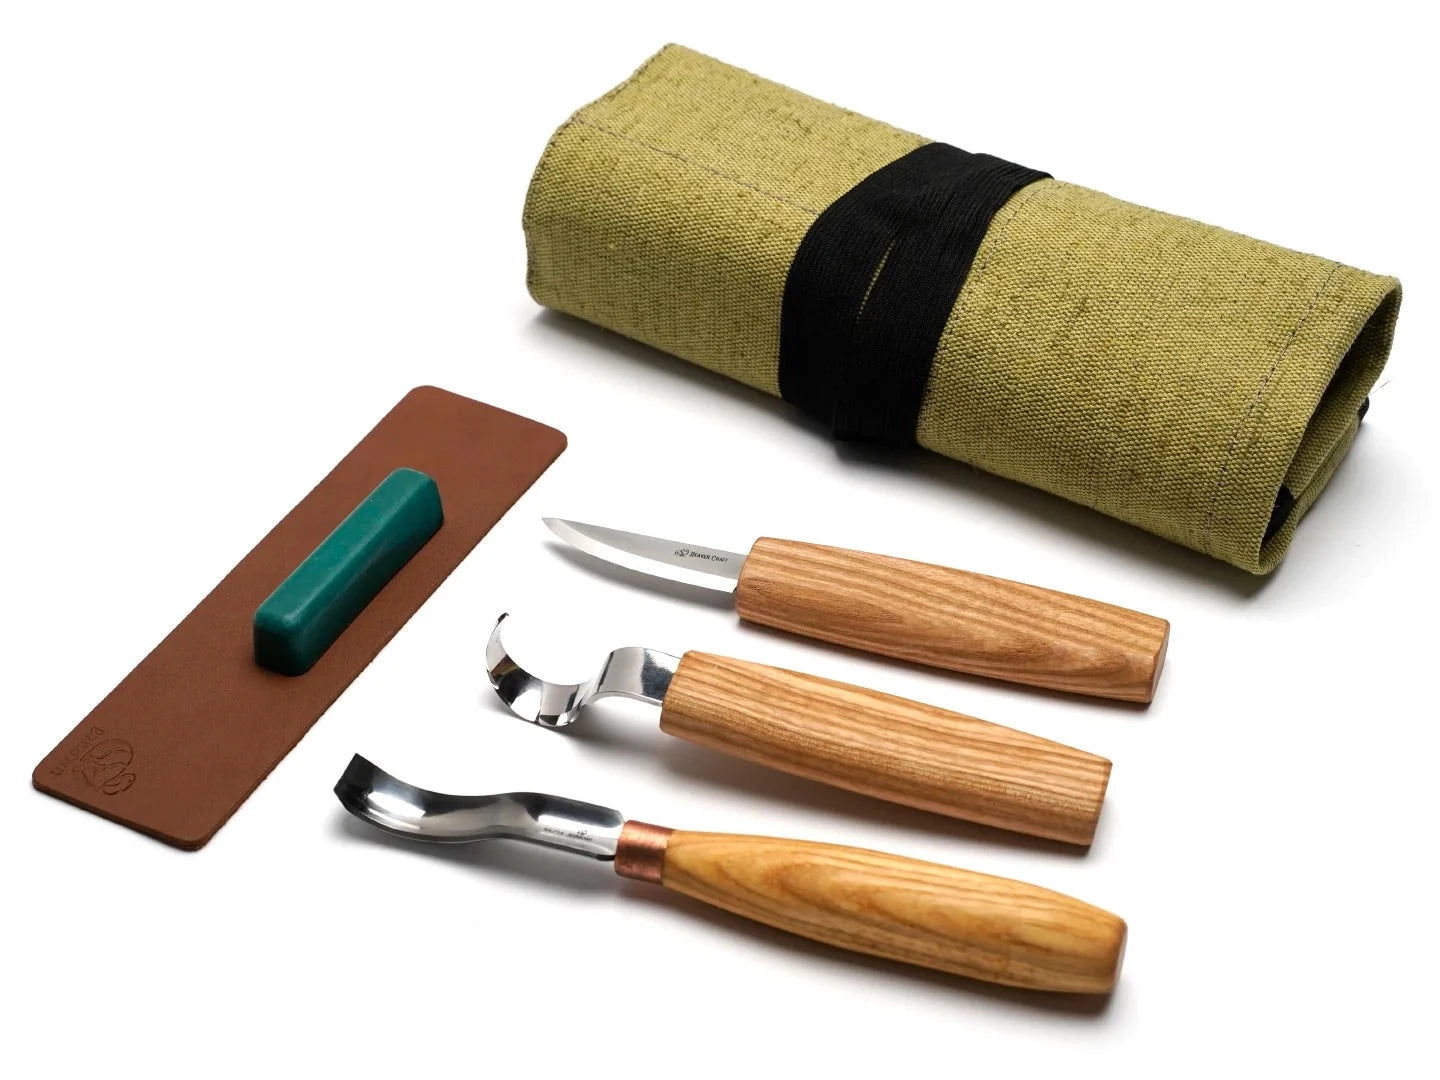 BeaverCraft Wood Carving Kit S14, wood carving set